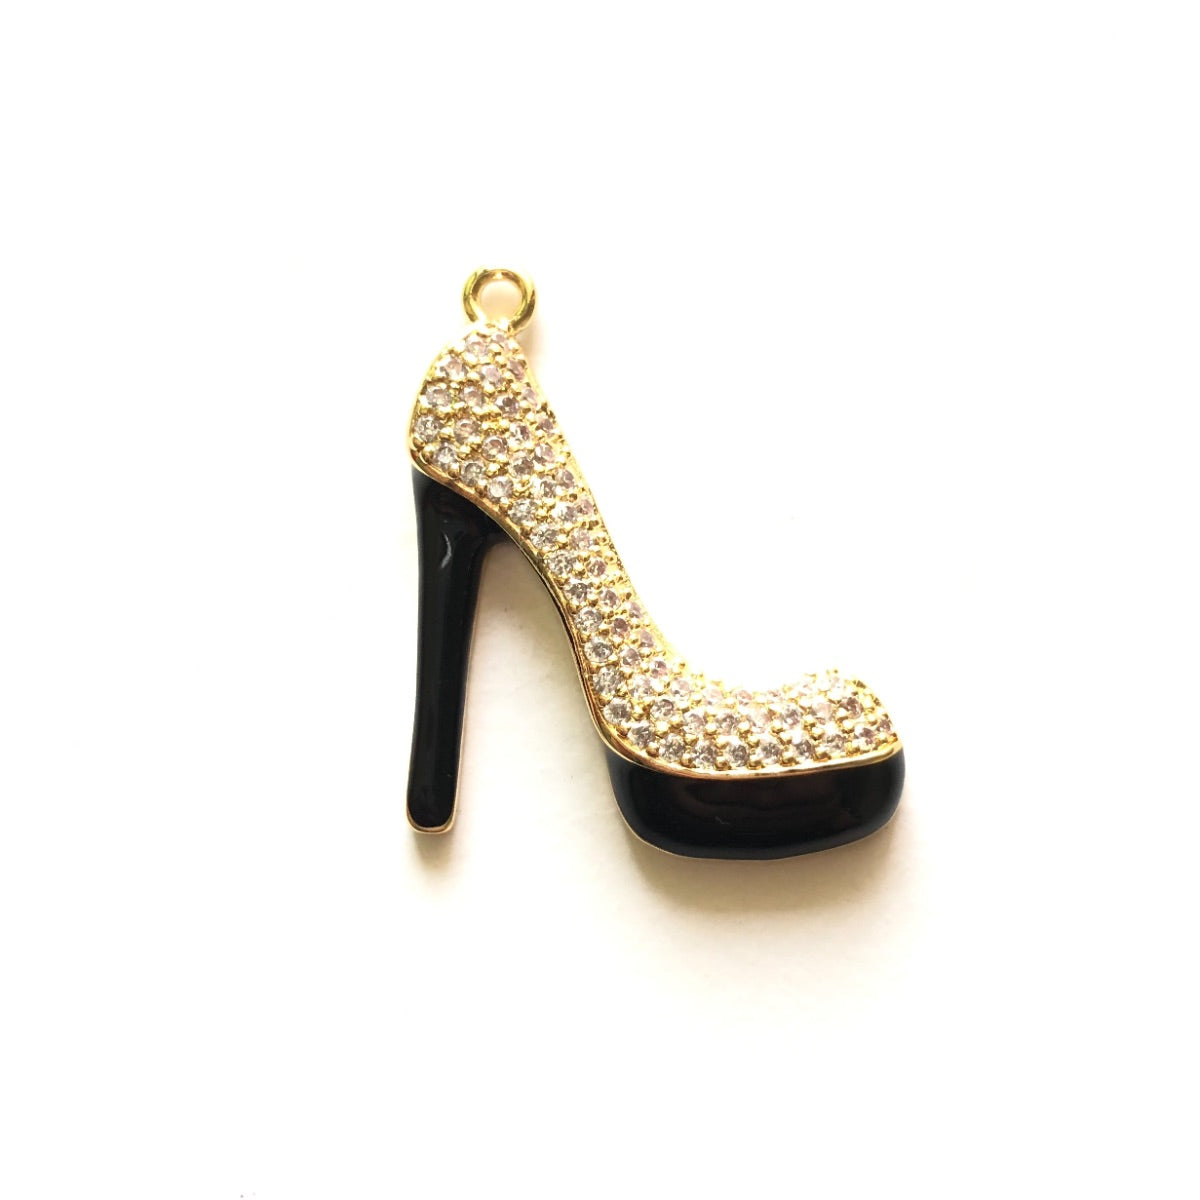 10pcs/lot 27*23mm CZ Paved Black Bottom High Heel Shoe Charms Gold CZ Paved Charms High Heels On Sale Charms Beads Beyond